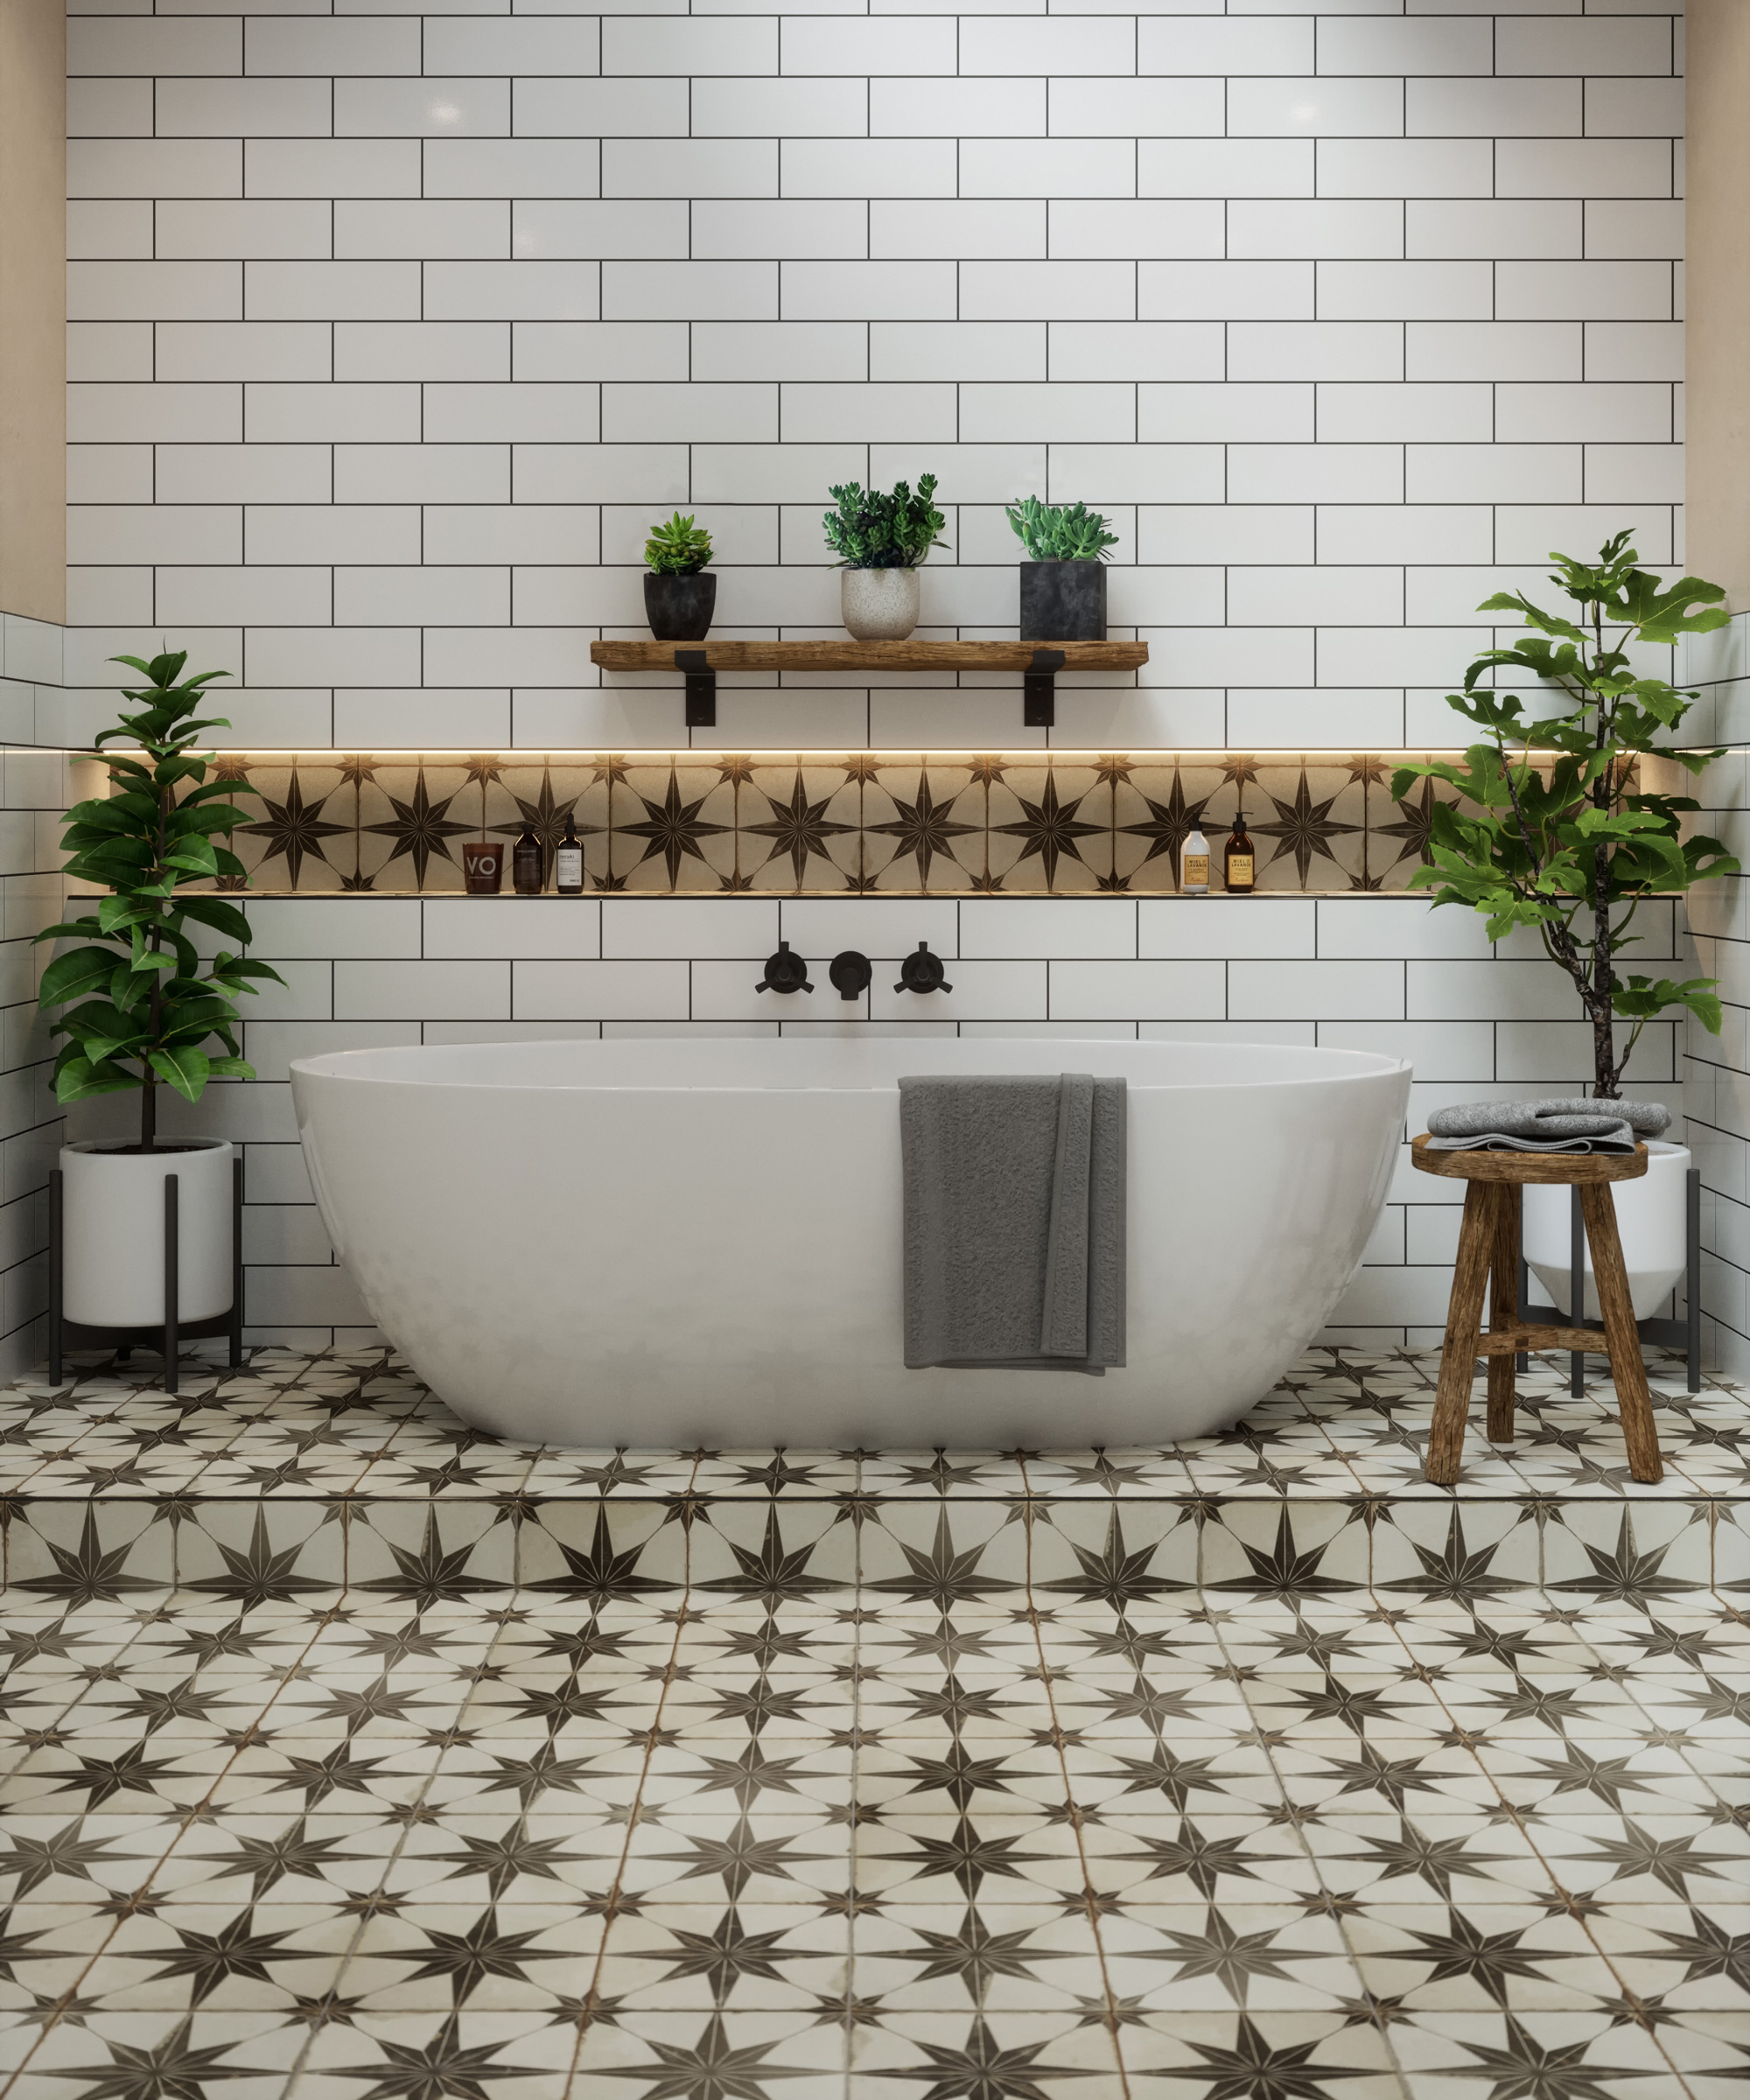 Bathroom Tile Ideas 32 New Looks To, Change Bathroom Floor Tile Color